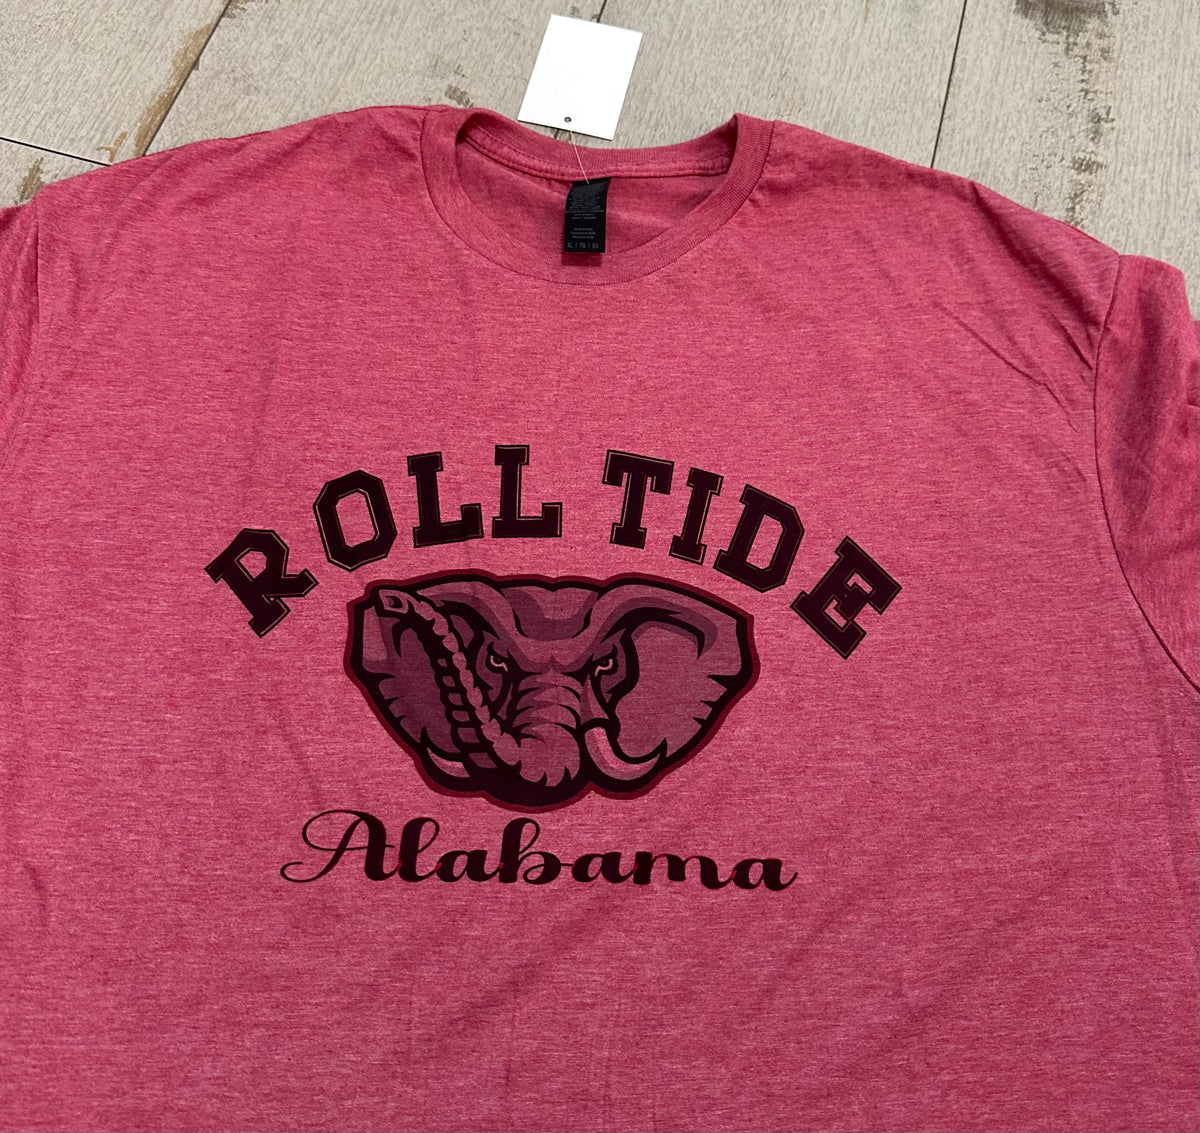 Roll Tide Alabama Graphic Tee